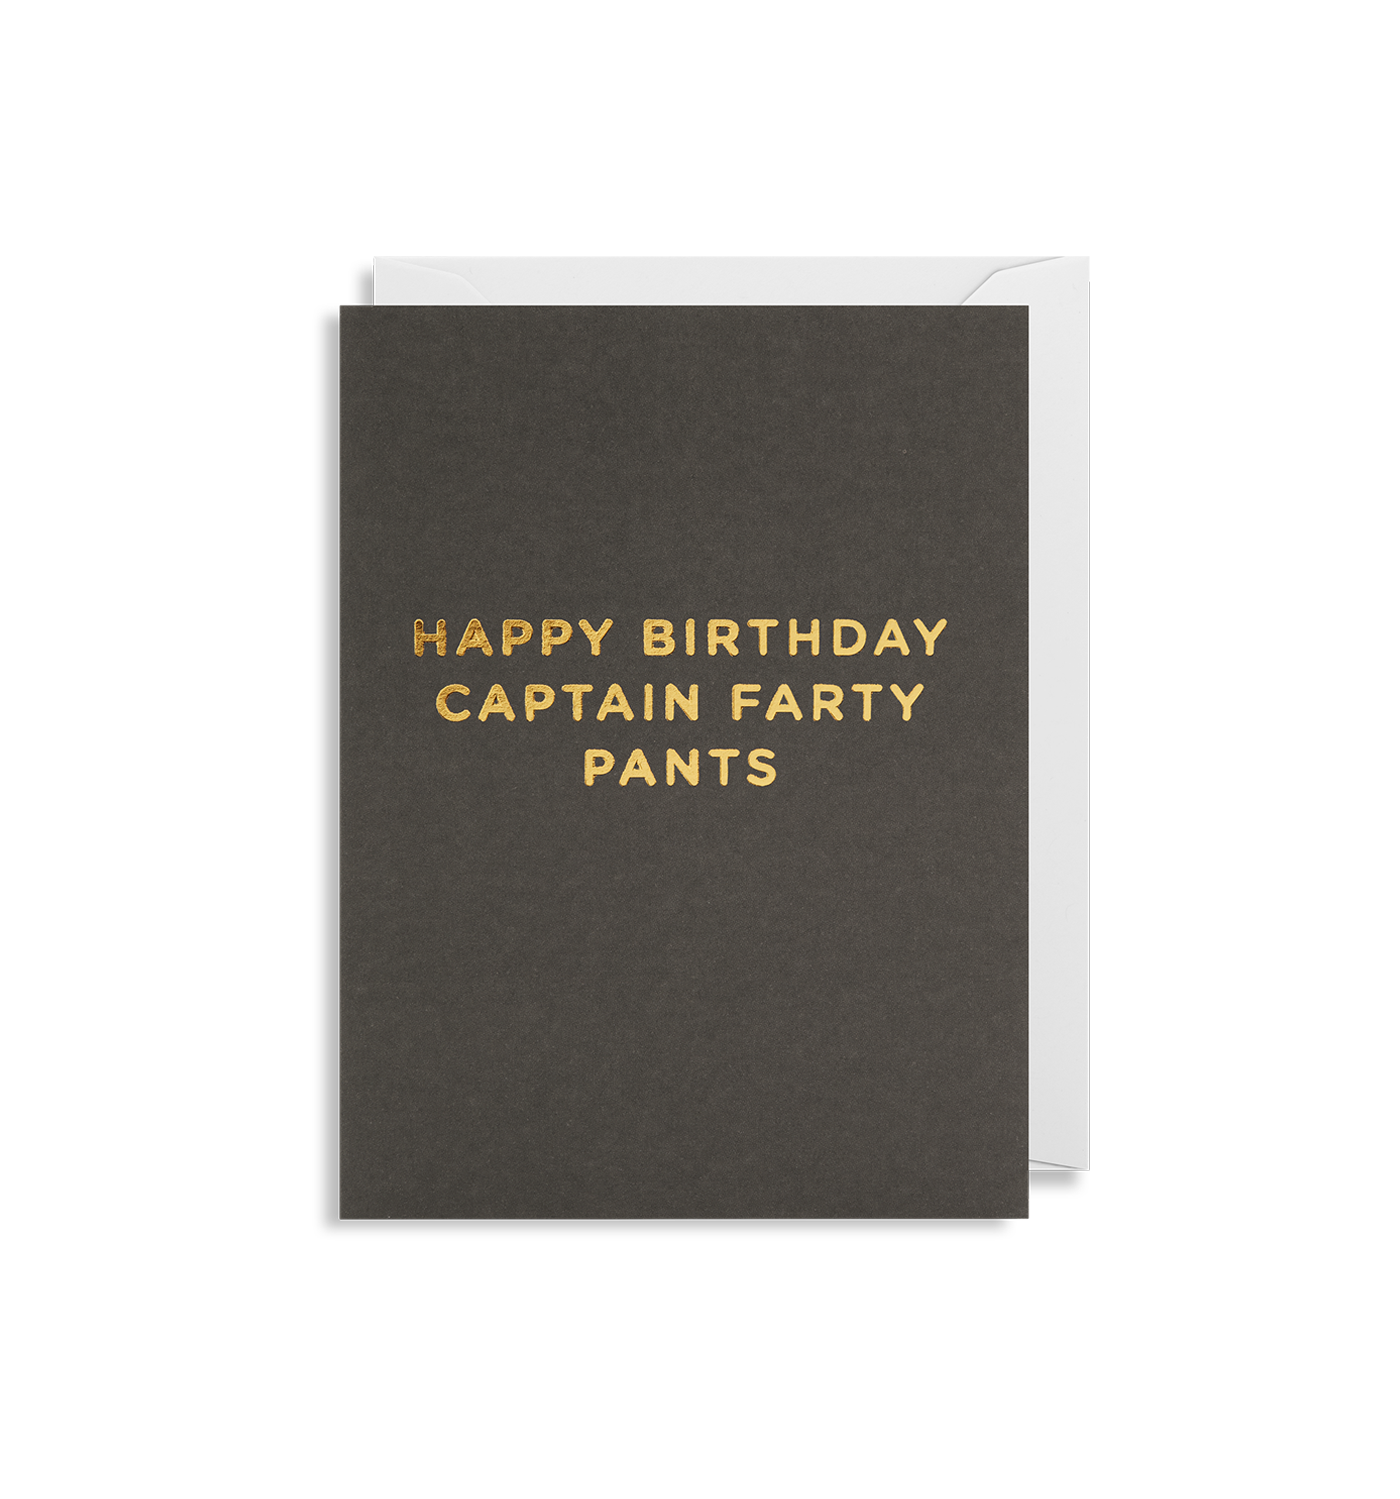 Happy Birthday Captain Farty Pants - Minicard